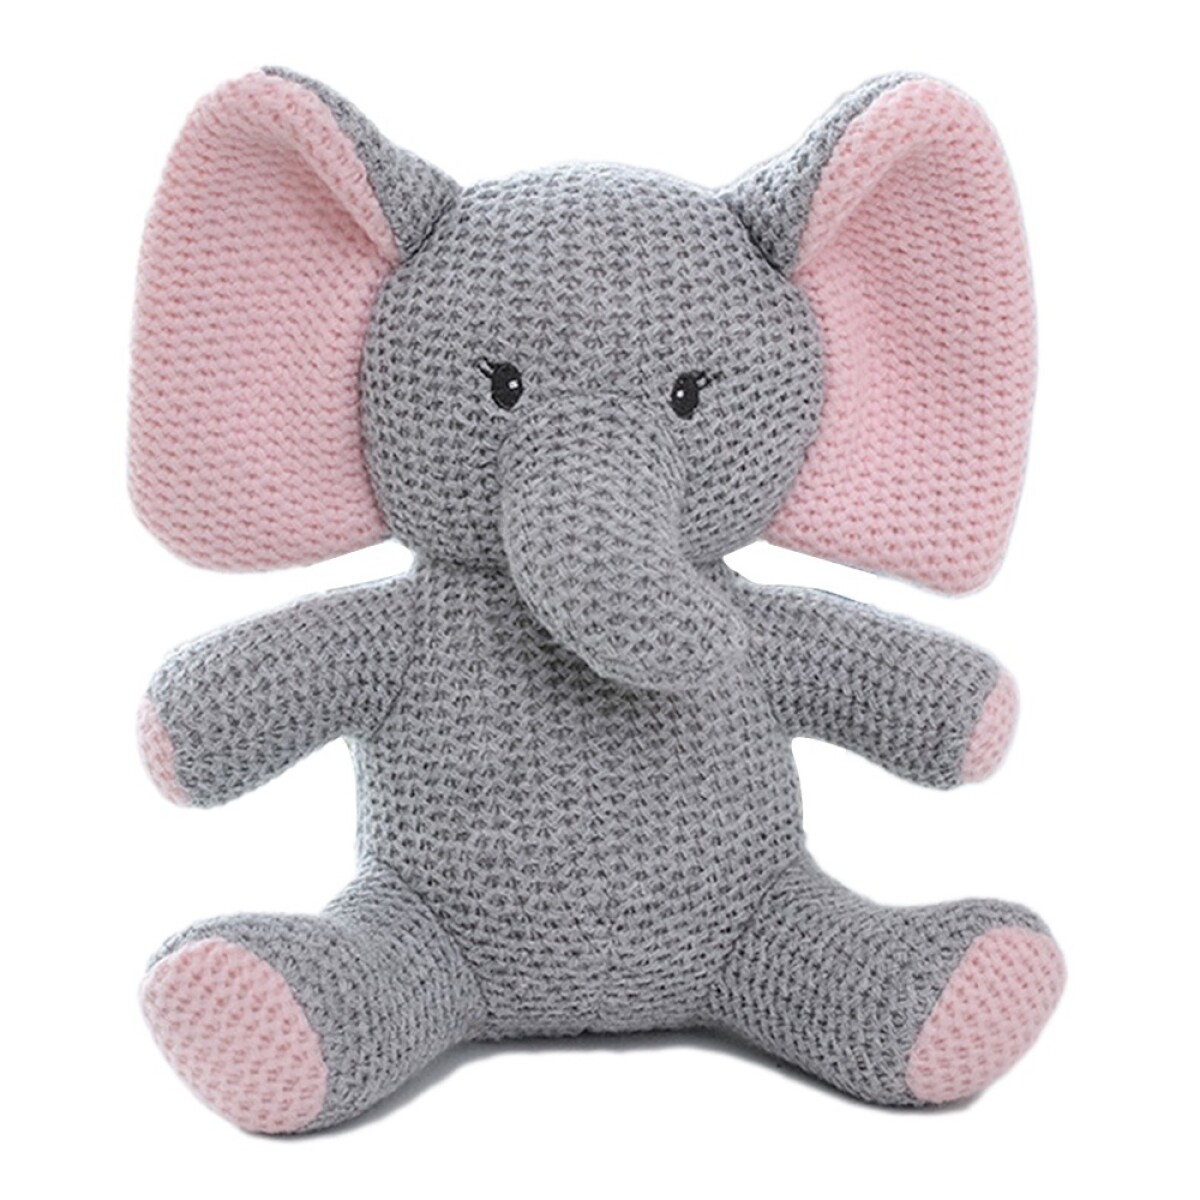 Peluches de Animales Tejidos Crochet c/ Cascabel Bebés Niños - Elefante 